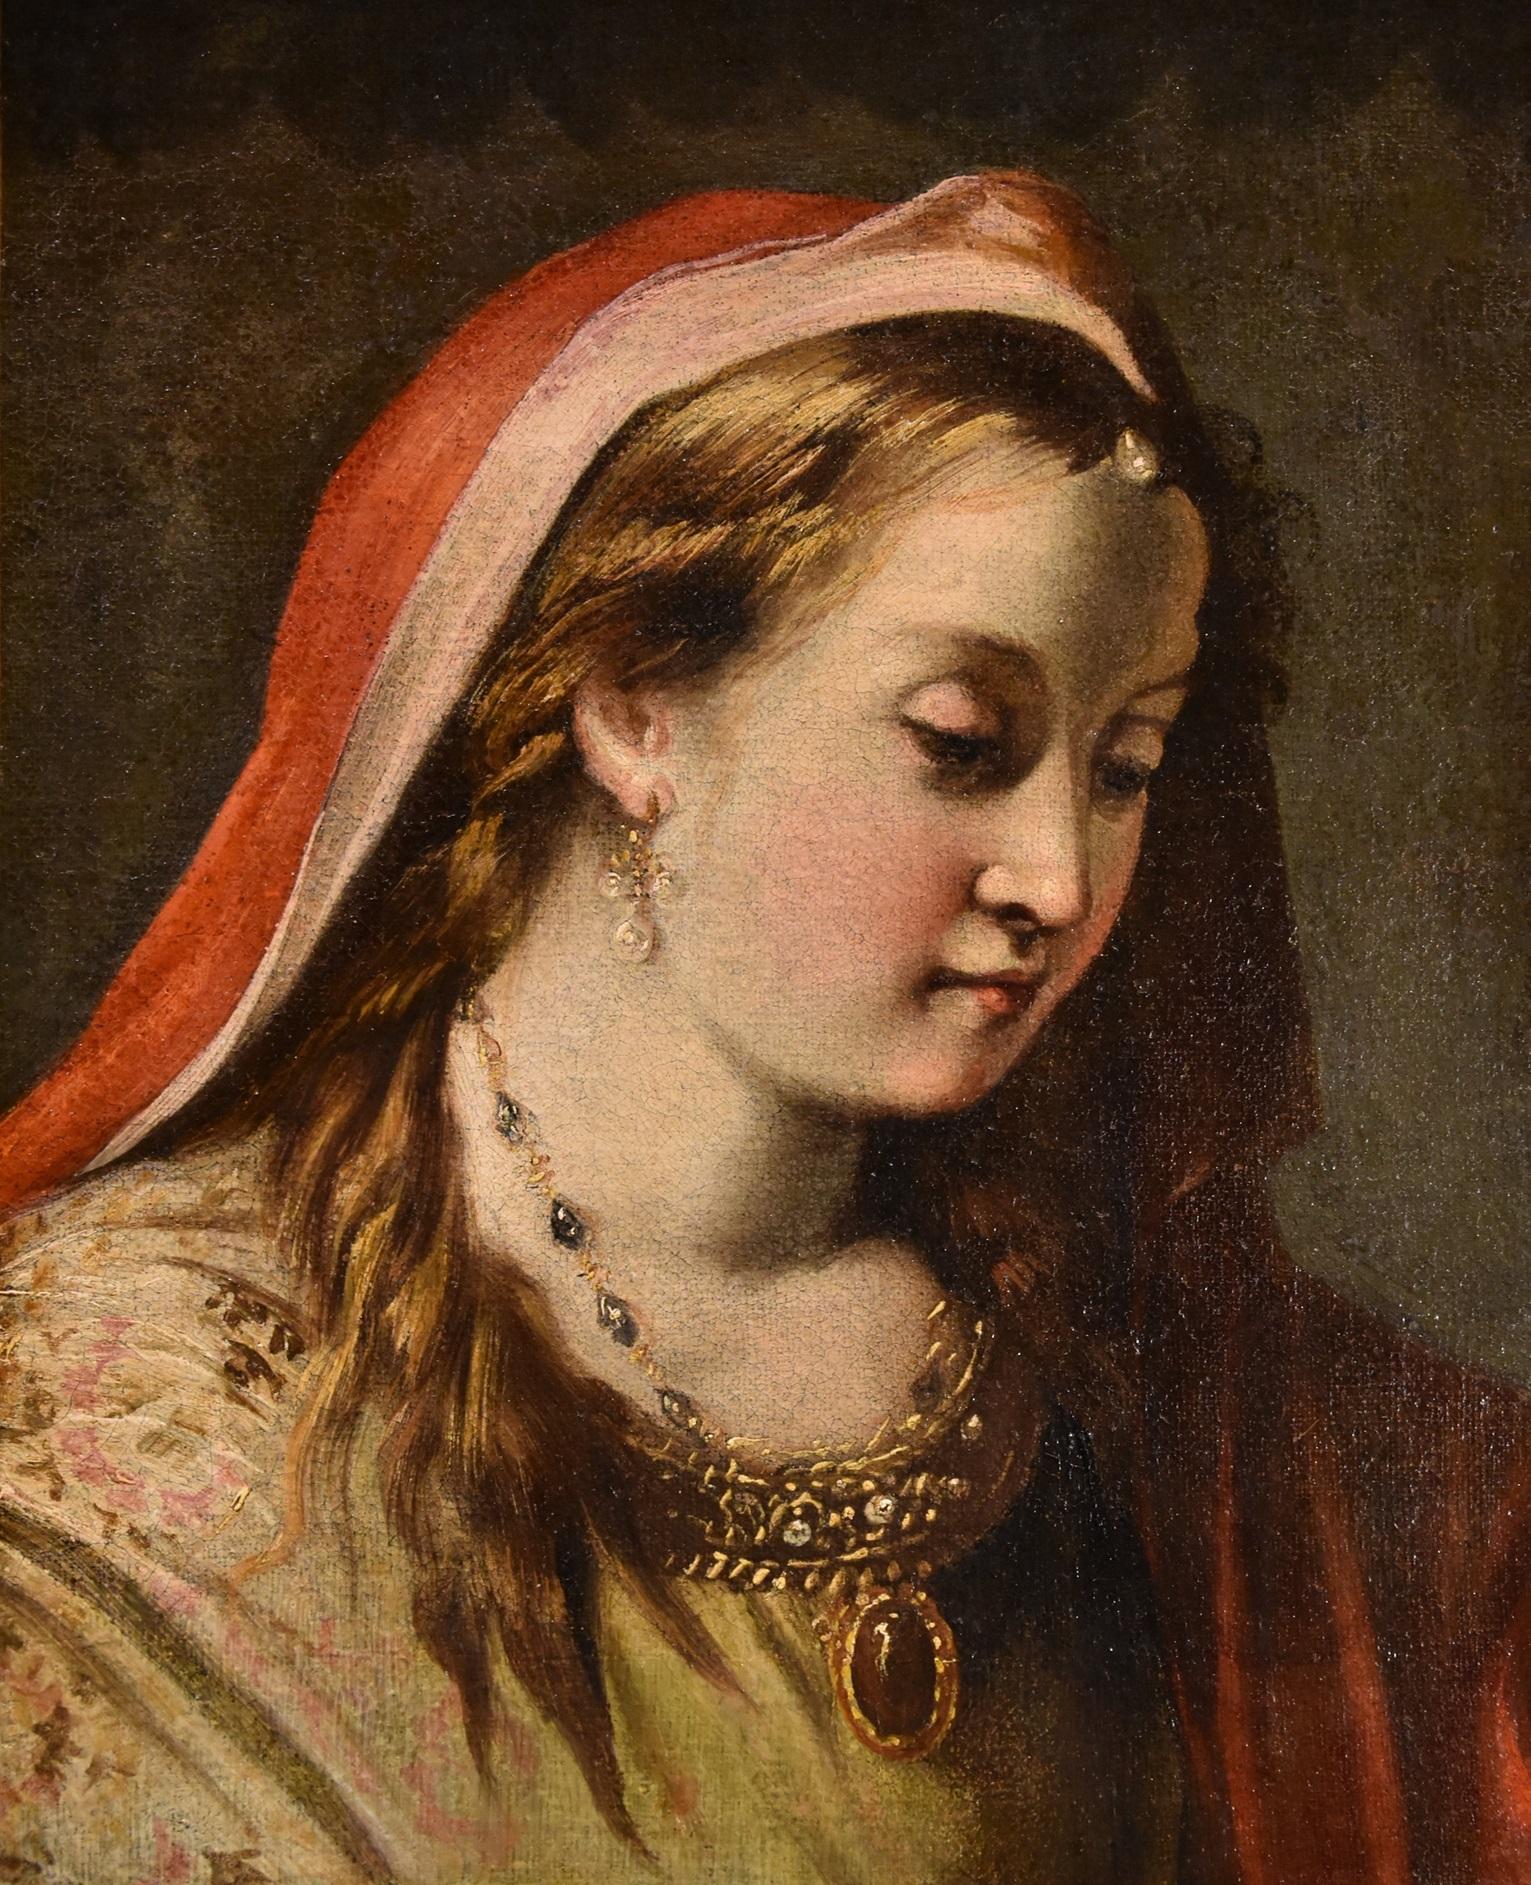 Gaspare Diziani (belluno 1689 - Venice 1767) Portrait Painting – Porträt Frau Prinzessin Diziani, Gemälde, Öl auf Leinwand, 18. Jahrhundert, Altmeister, Kunst